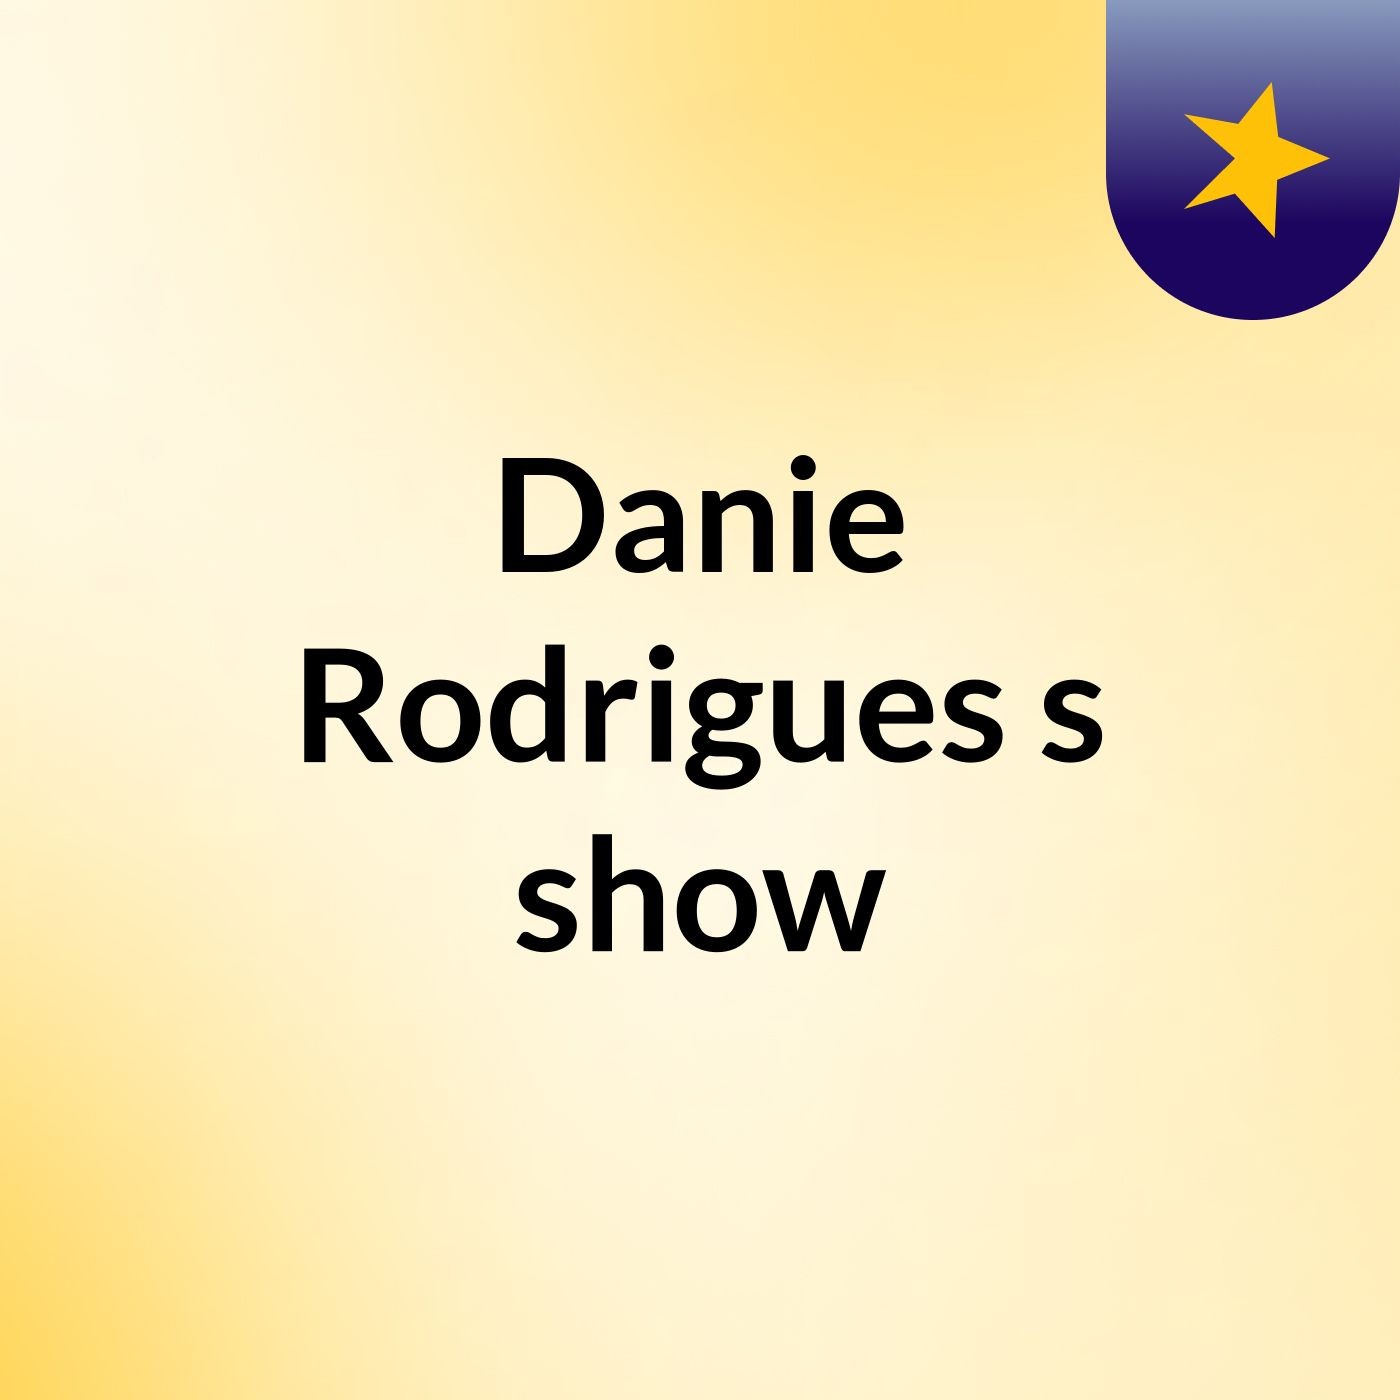 Danie Rodrigues's show